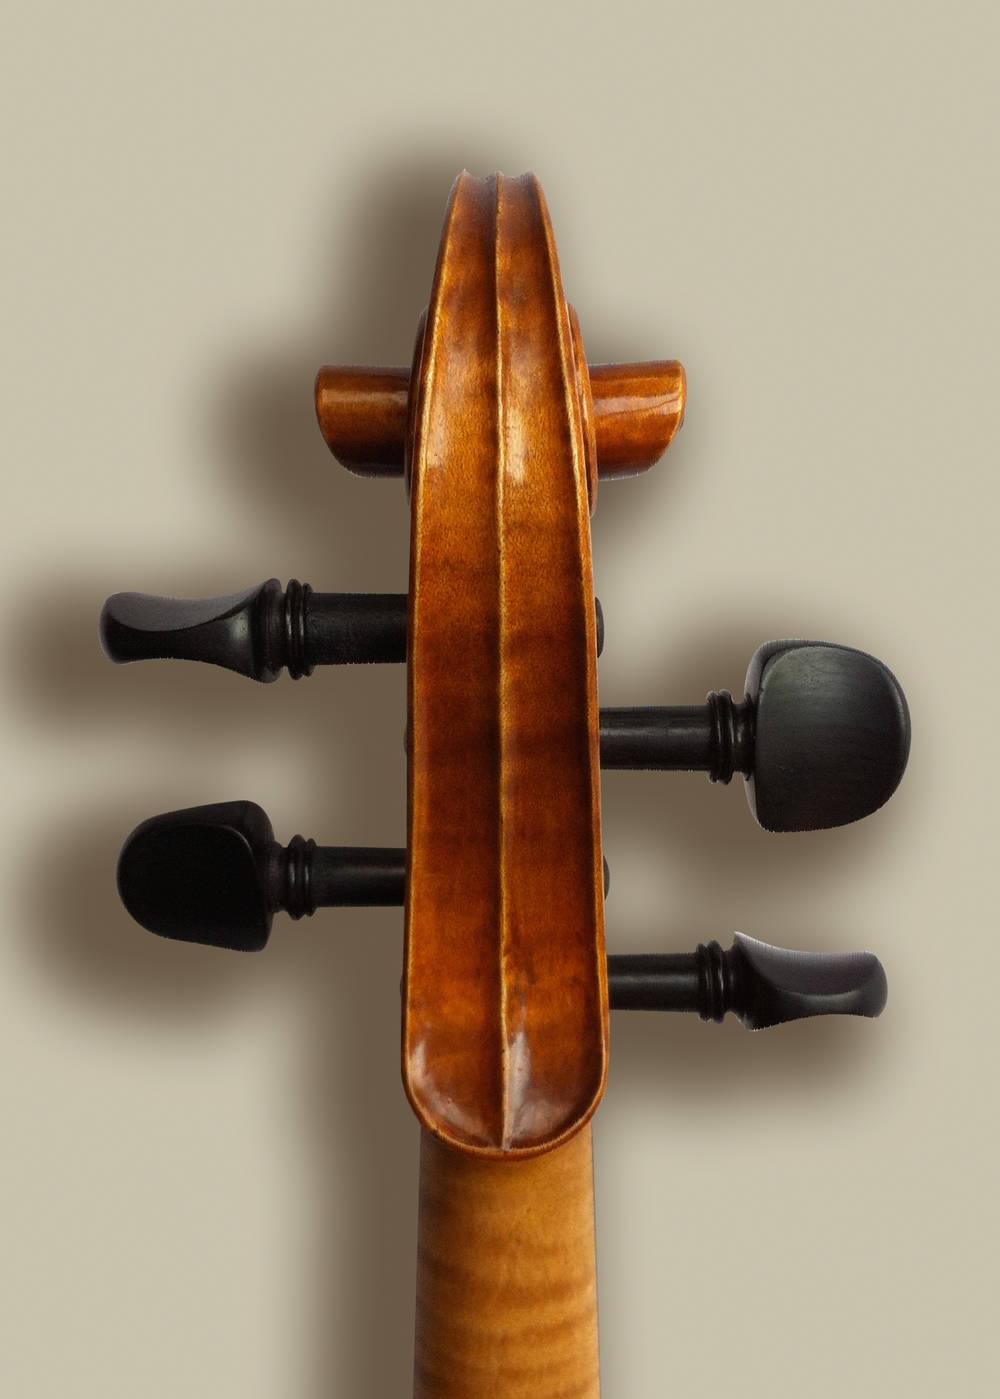 Violin Guarneri del Gesu 'Leduc' 1745